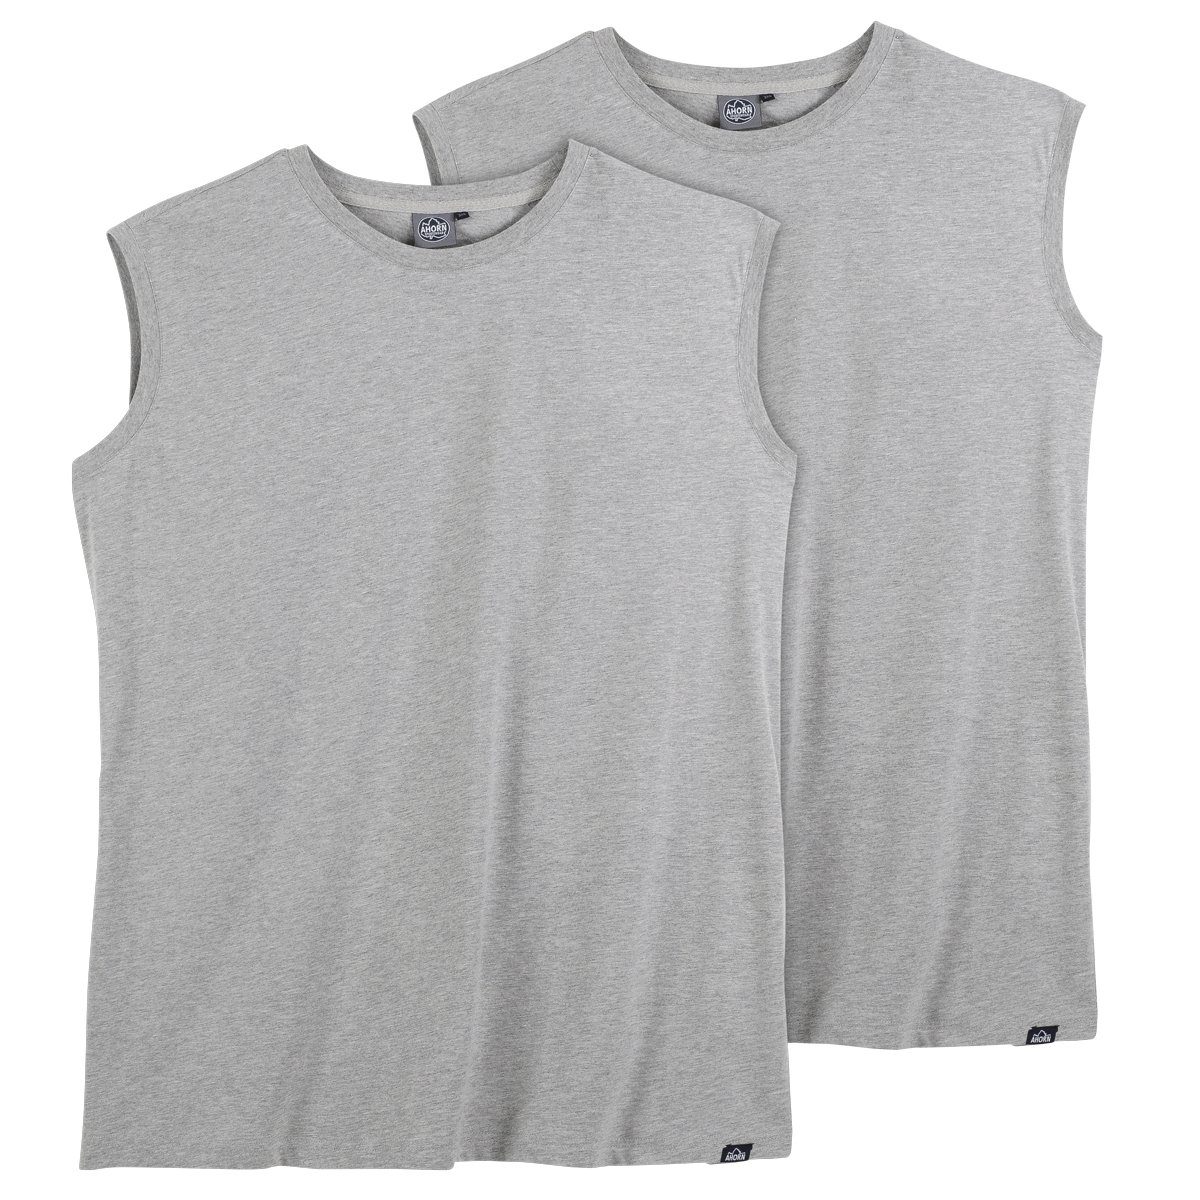 AHORN SPORTSWEAR Muscleshirt Basic Tank Top 2er-Pack grau melange Übergröße Ahorn Sportswear